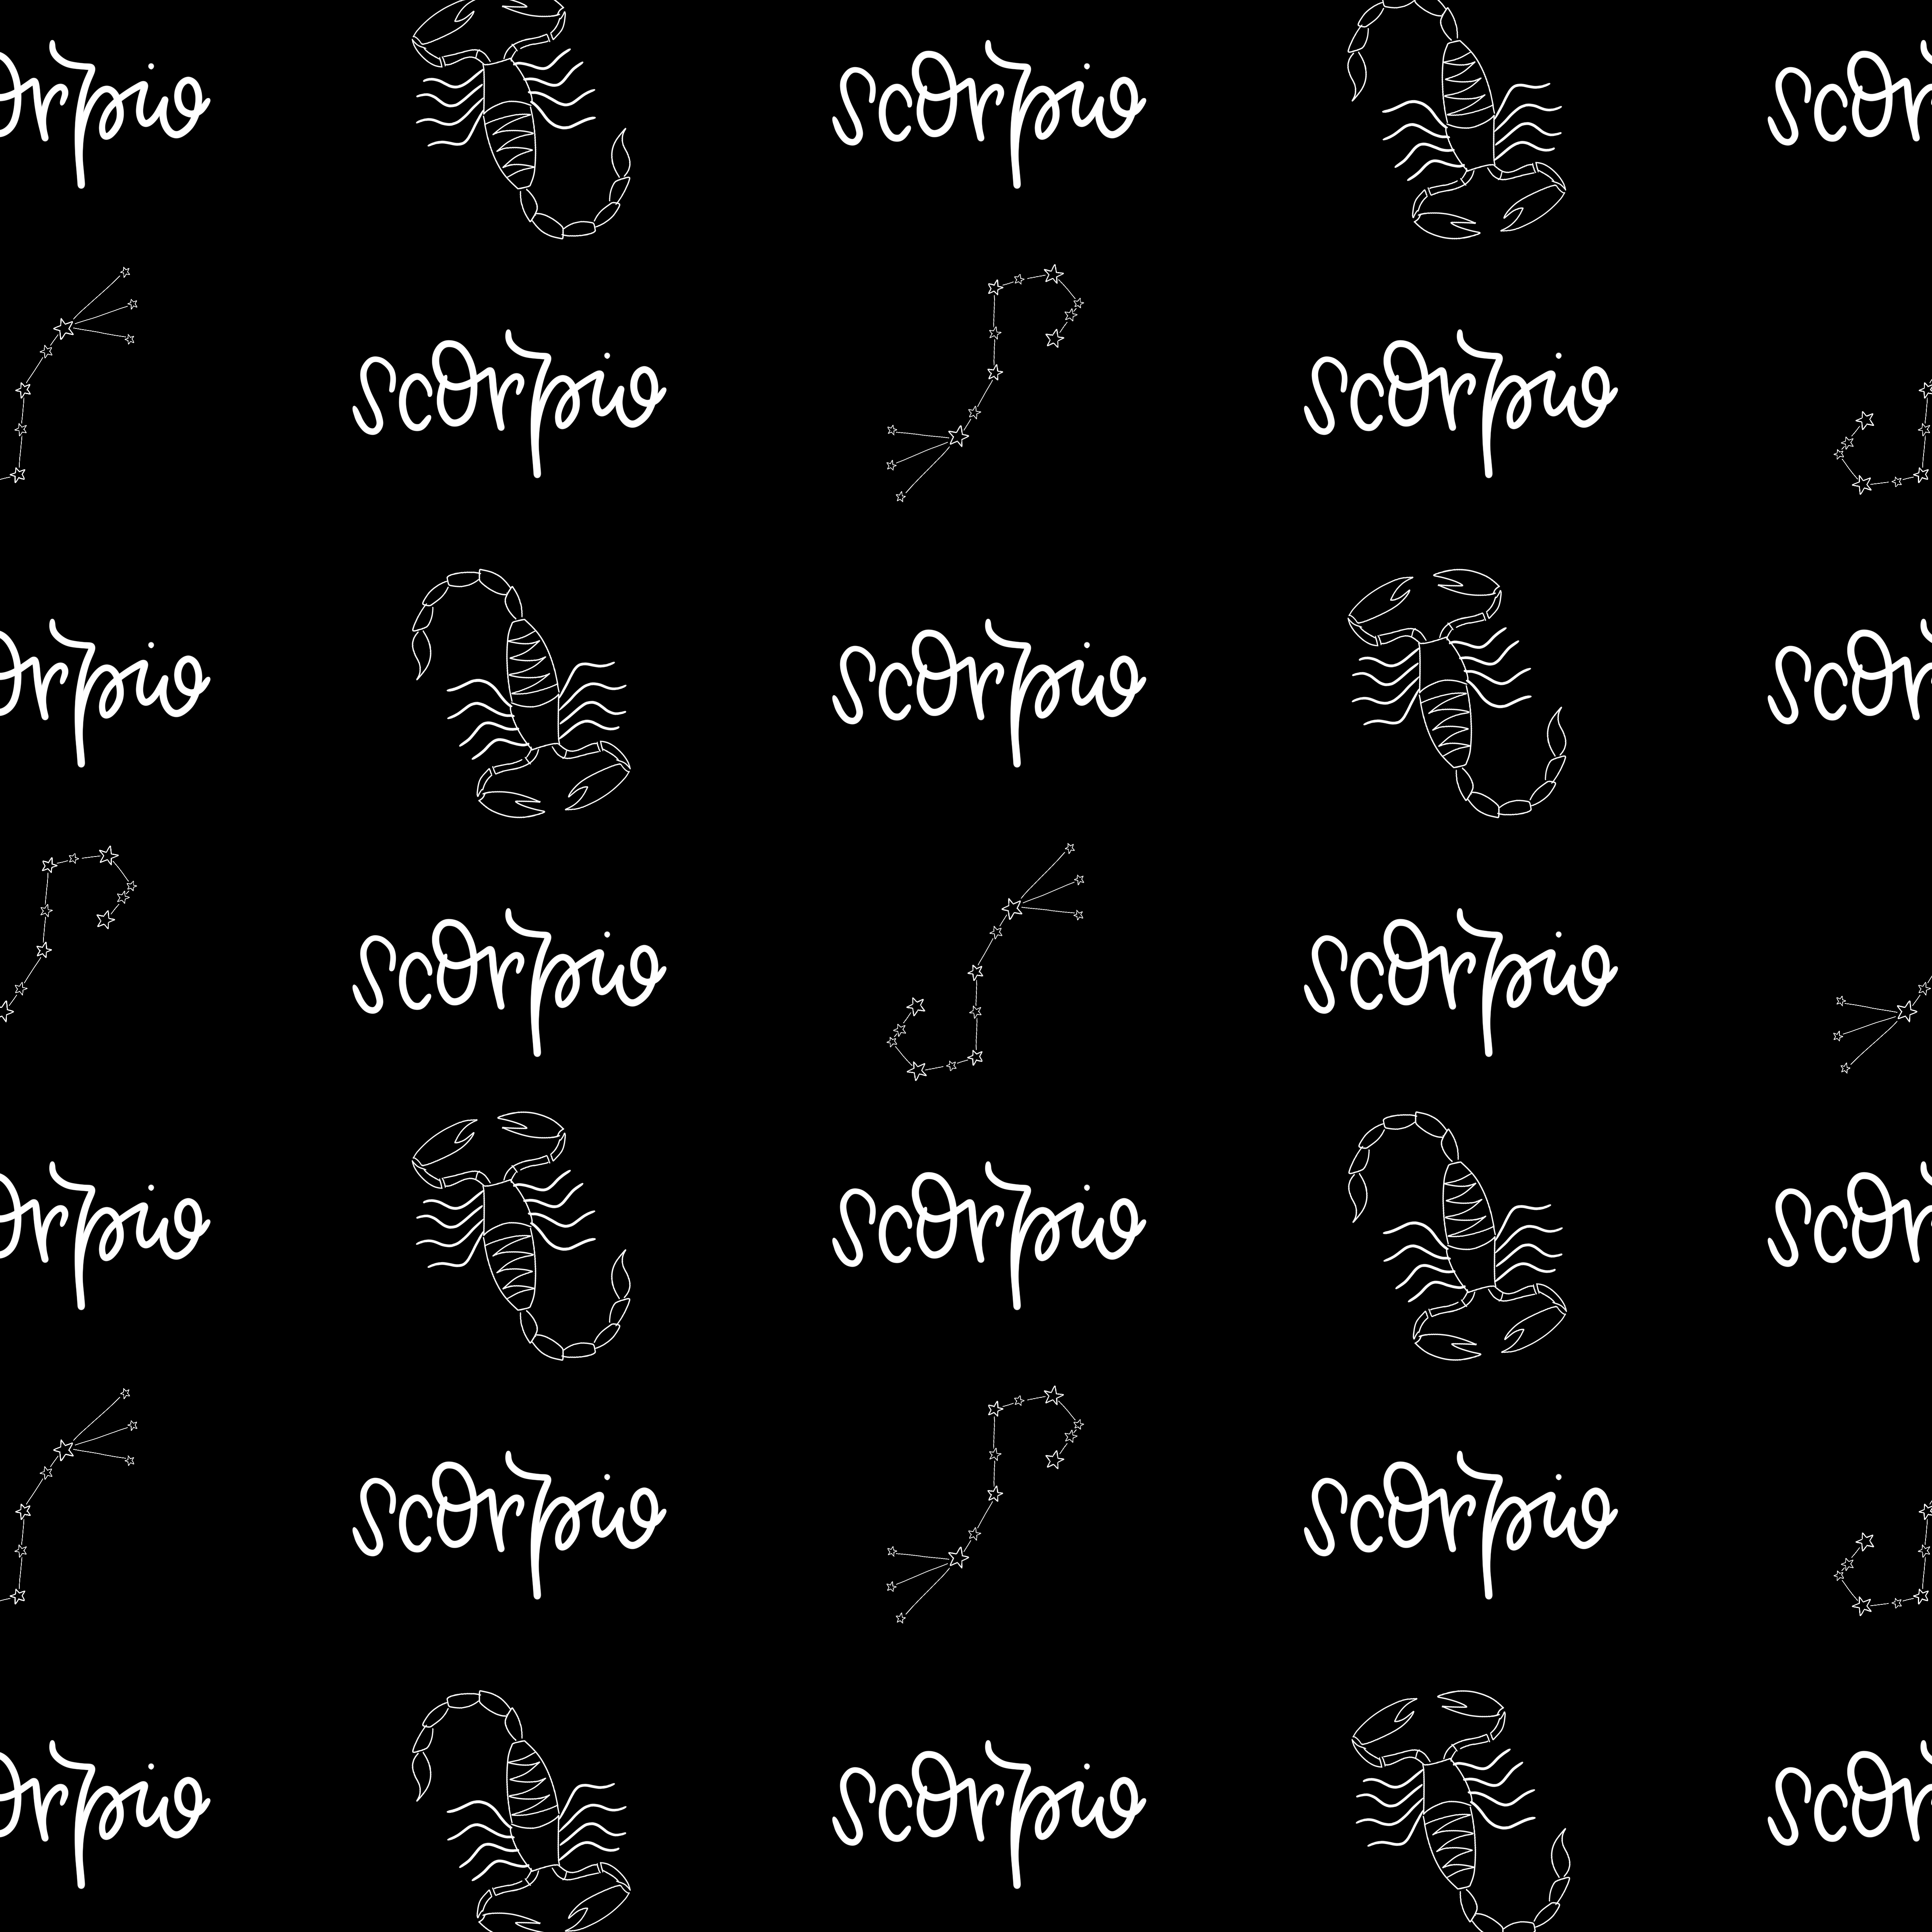 Scorpio_Wallpaper_BlackBckgrd